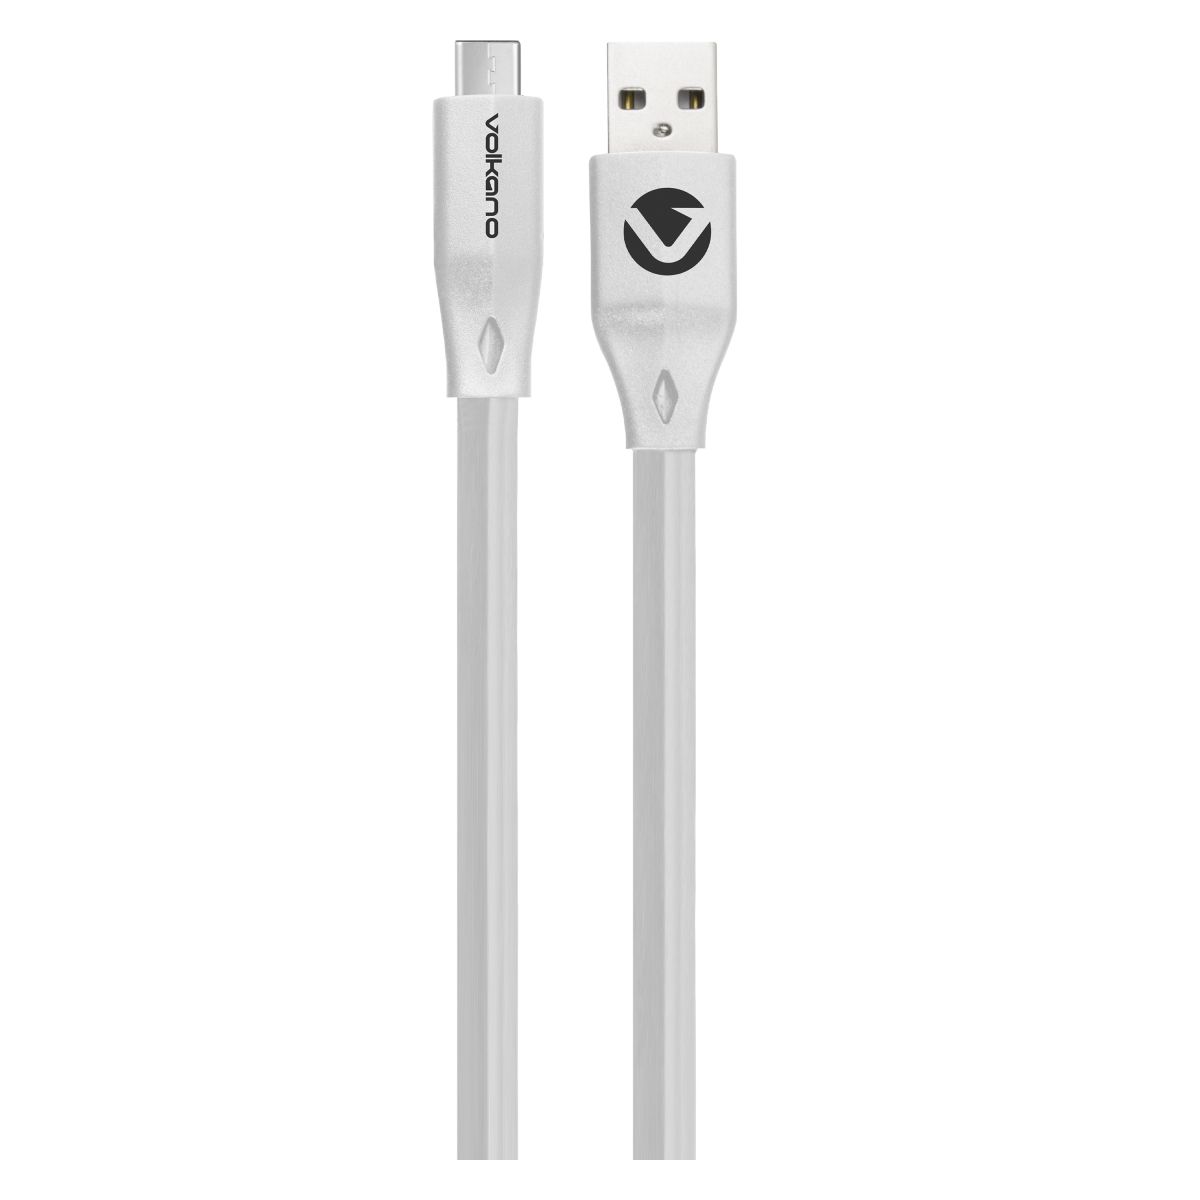 Volkano Smart Series Auto-Disconnect USB Type-C Cable (6', Black)